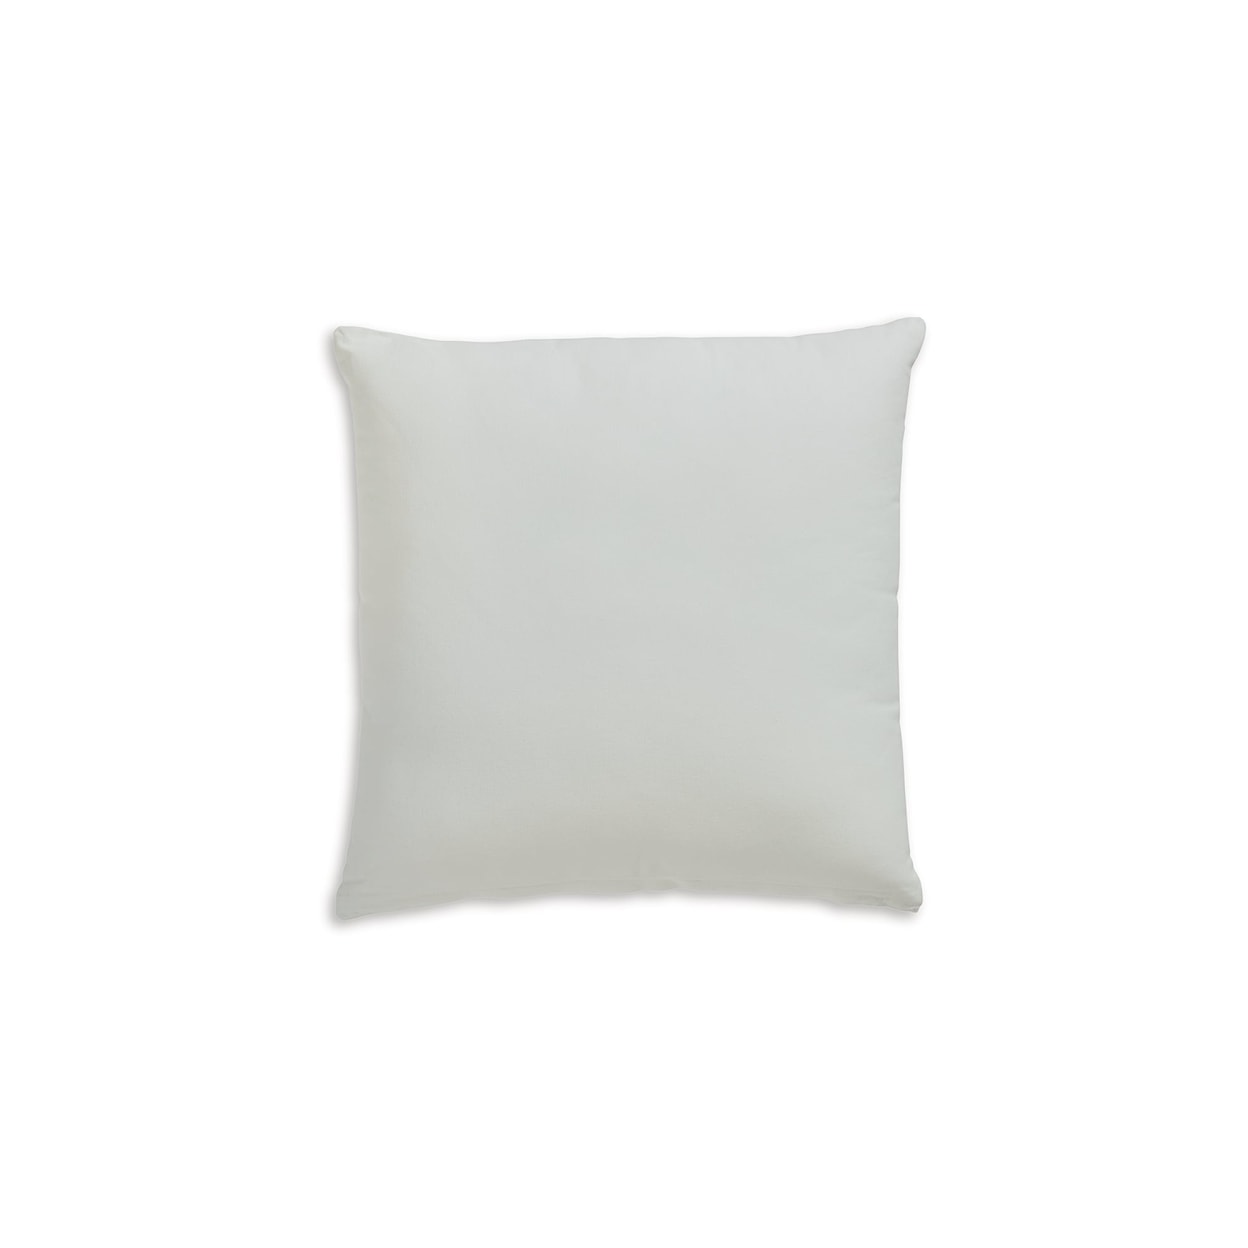 Ashley Furniture Signature Design Gyldan Pillow (Set of 4)